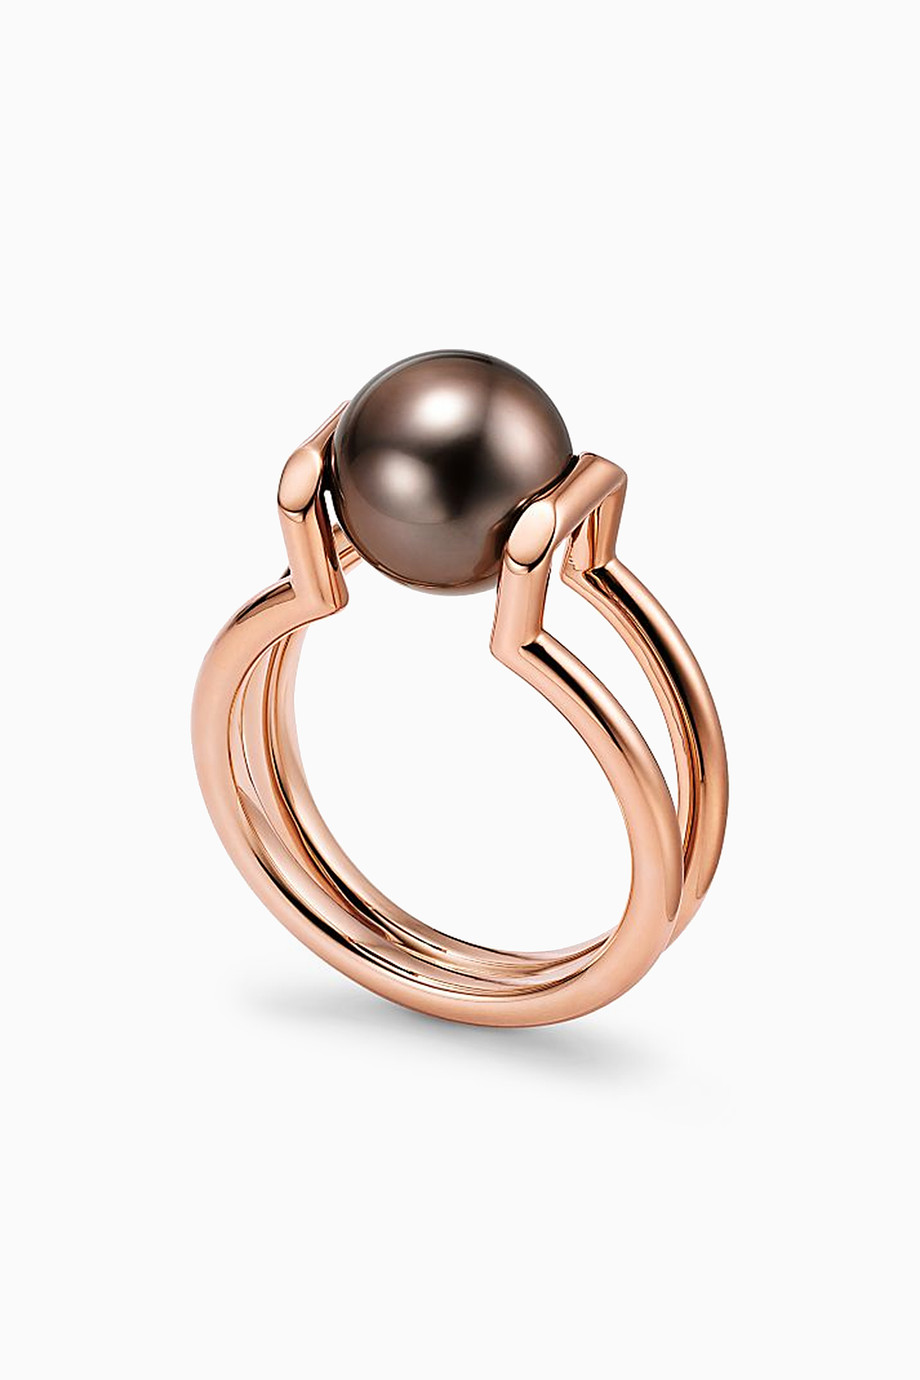 Shop Tiffany & Co. Rose Gold Tiffany HardWear Tahitian Black Pearl Ring